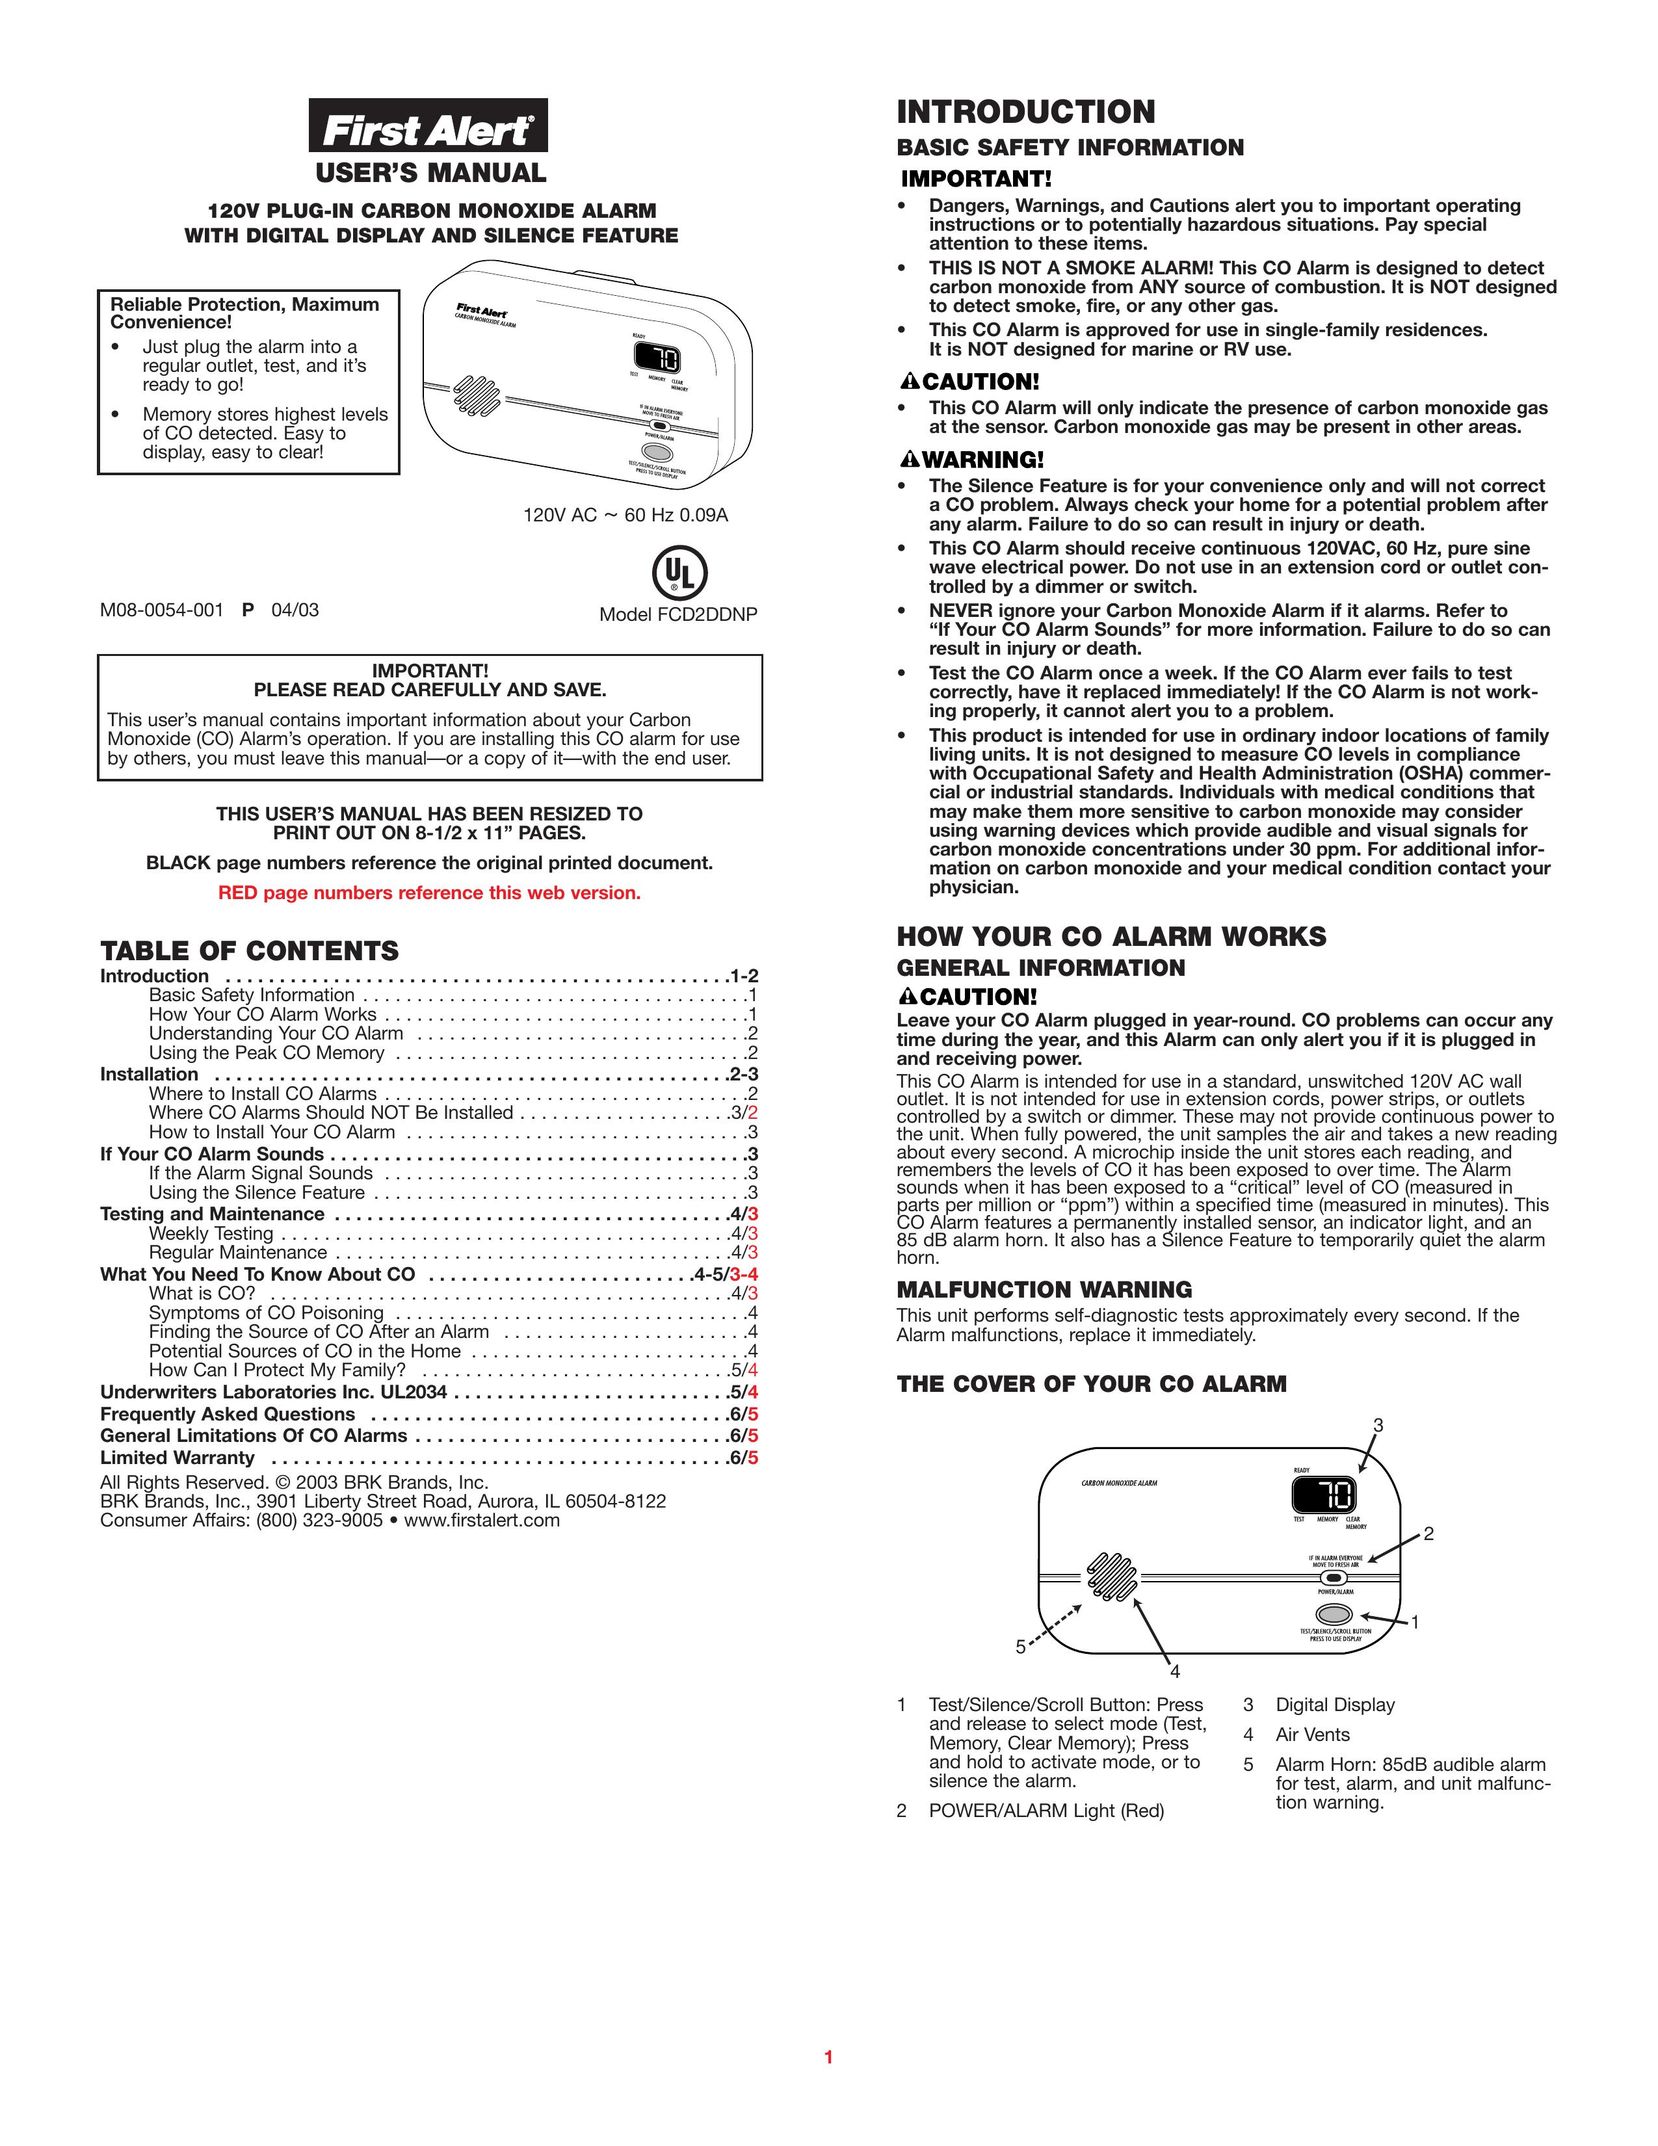 BRK electronic FCD2DDNP Smoke Alarm User Manual